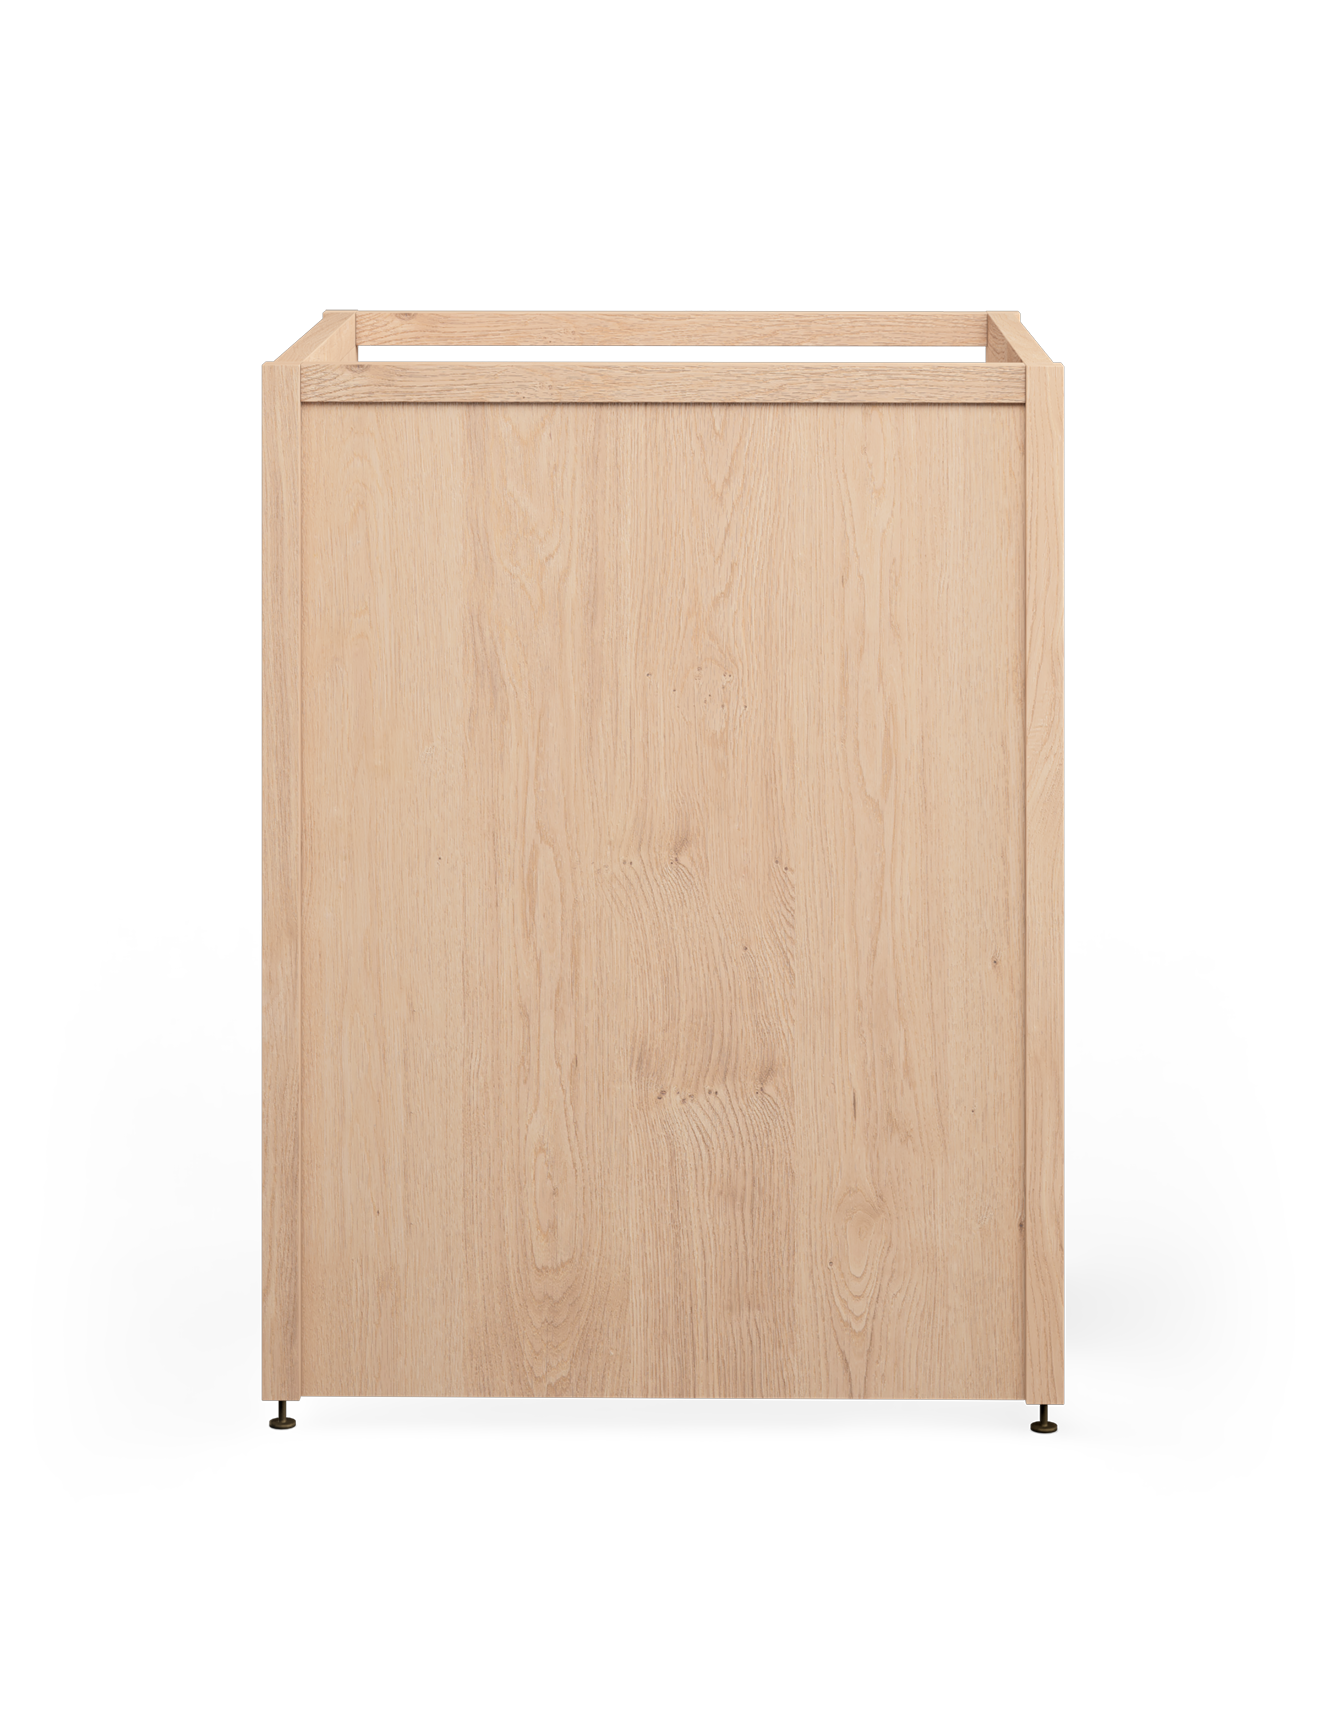 Coquo modular kitchen appliance kit in natural oak. 
